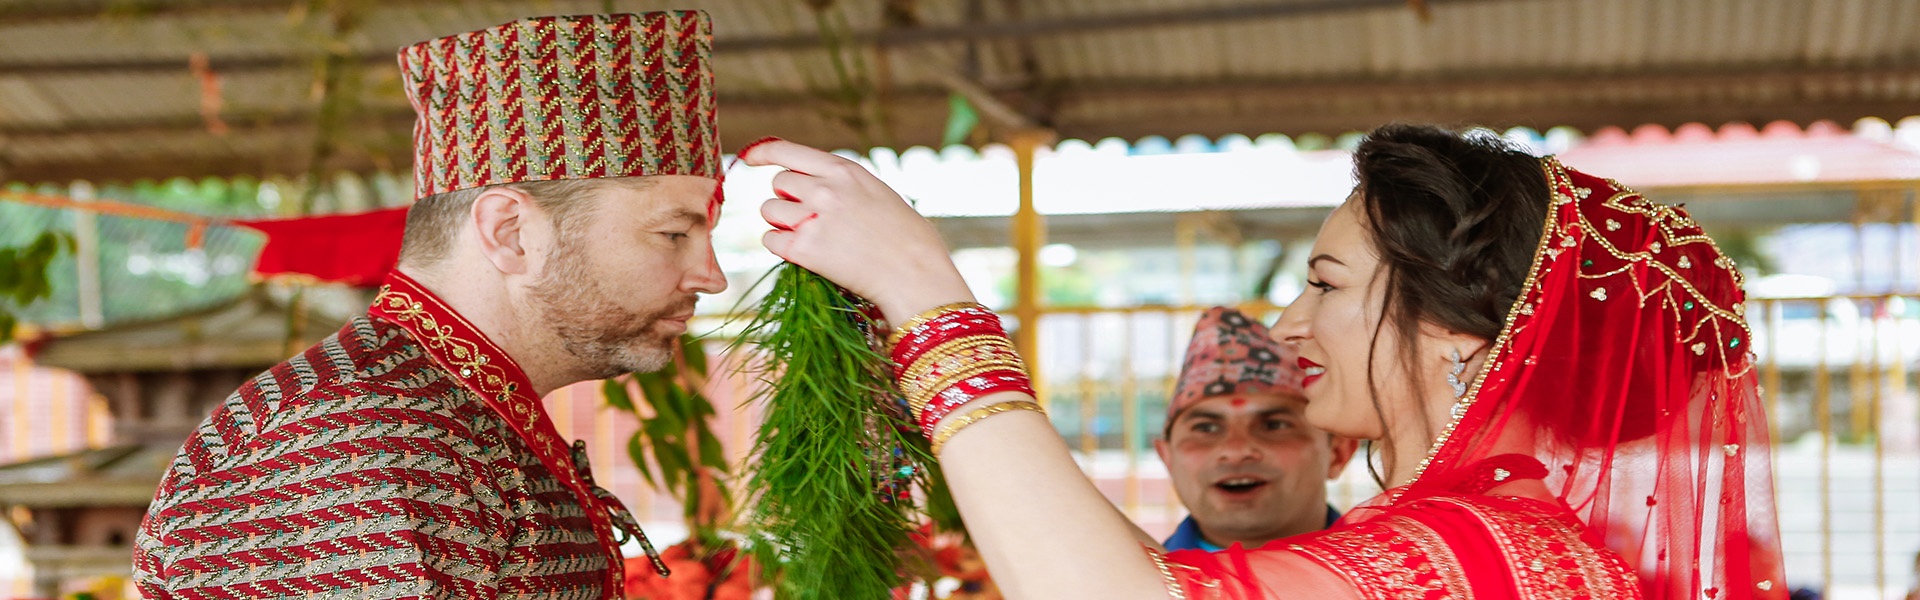 Traditional Hindu Wedding in Nepal Banner